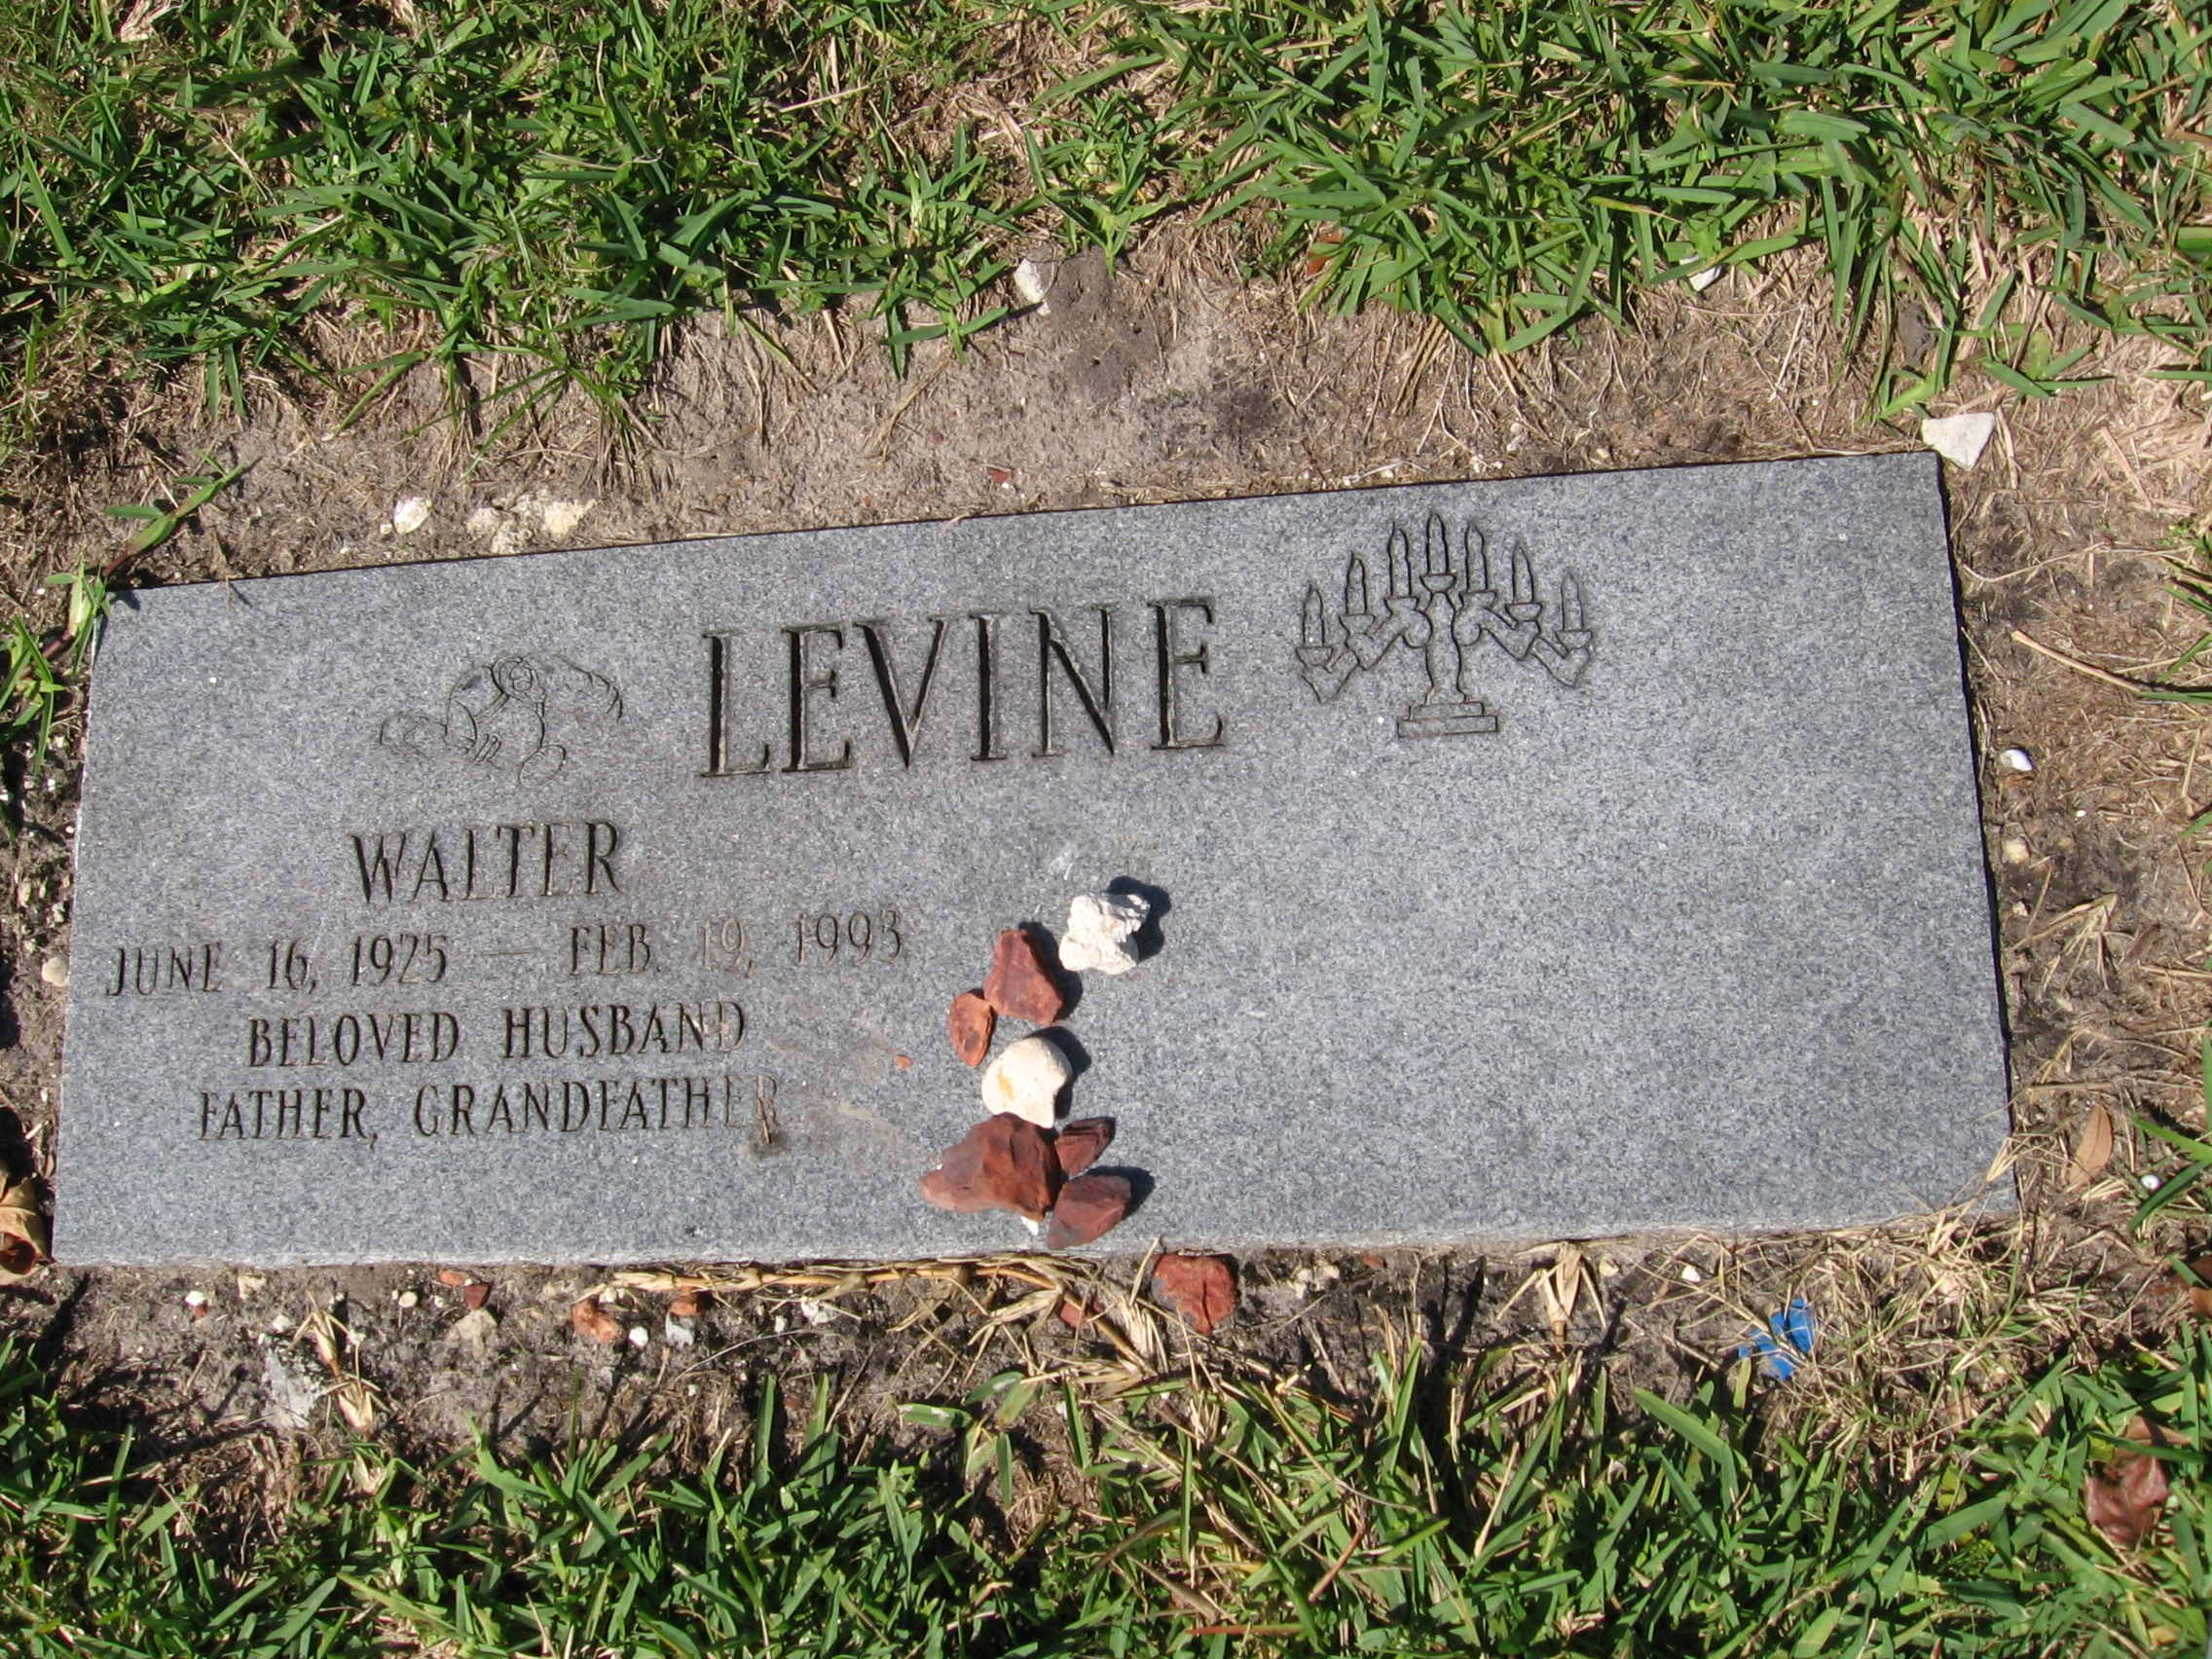 Walter Levine